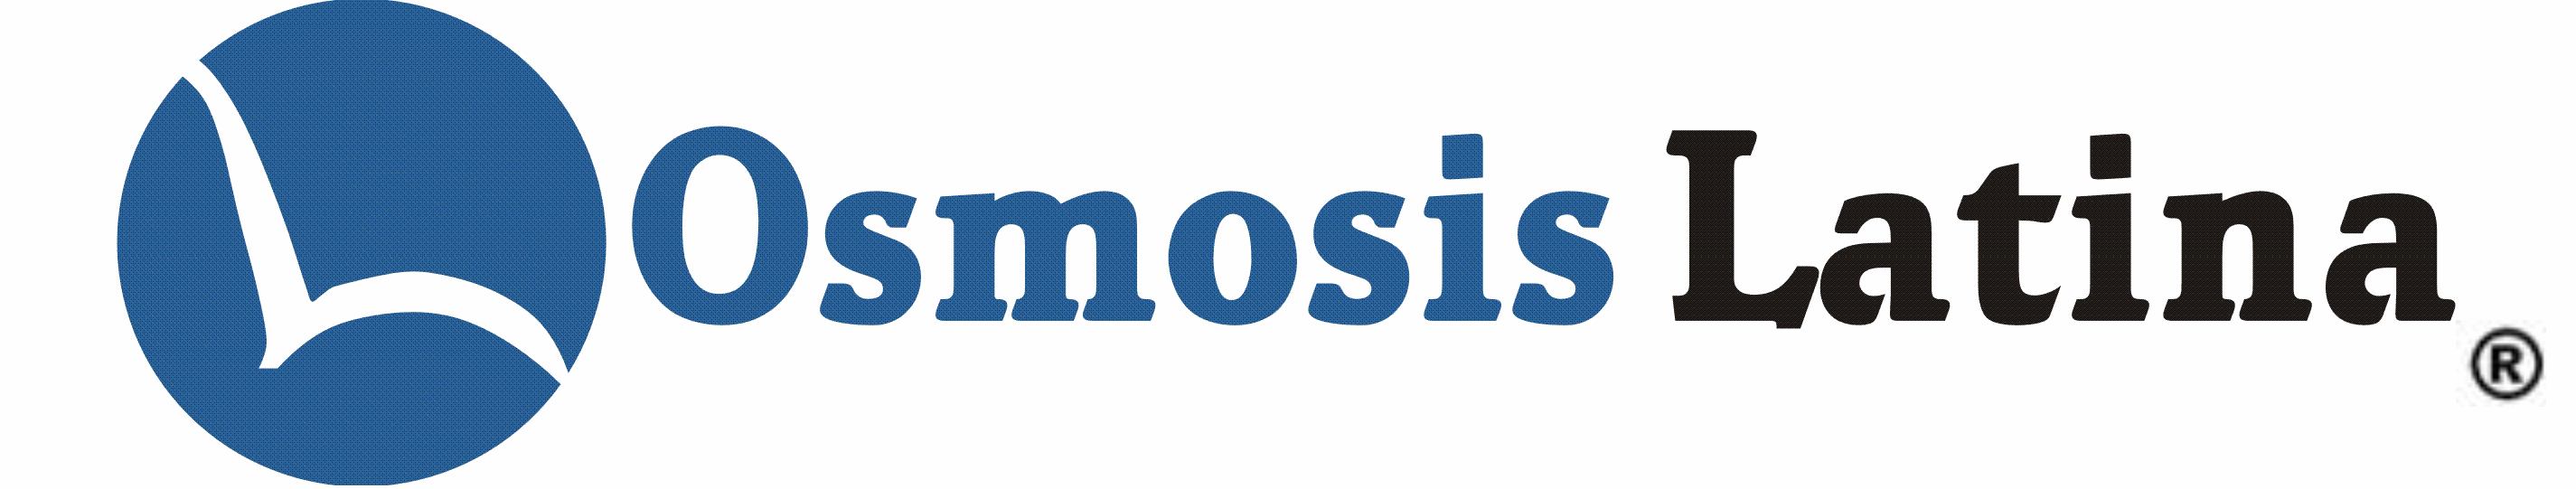 El logo modificado de Osmosis Latina con mÃ¡s pixels